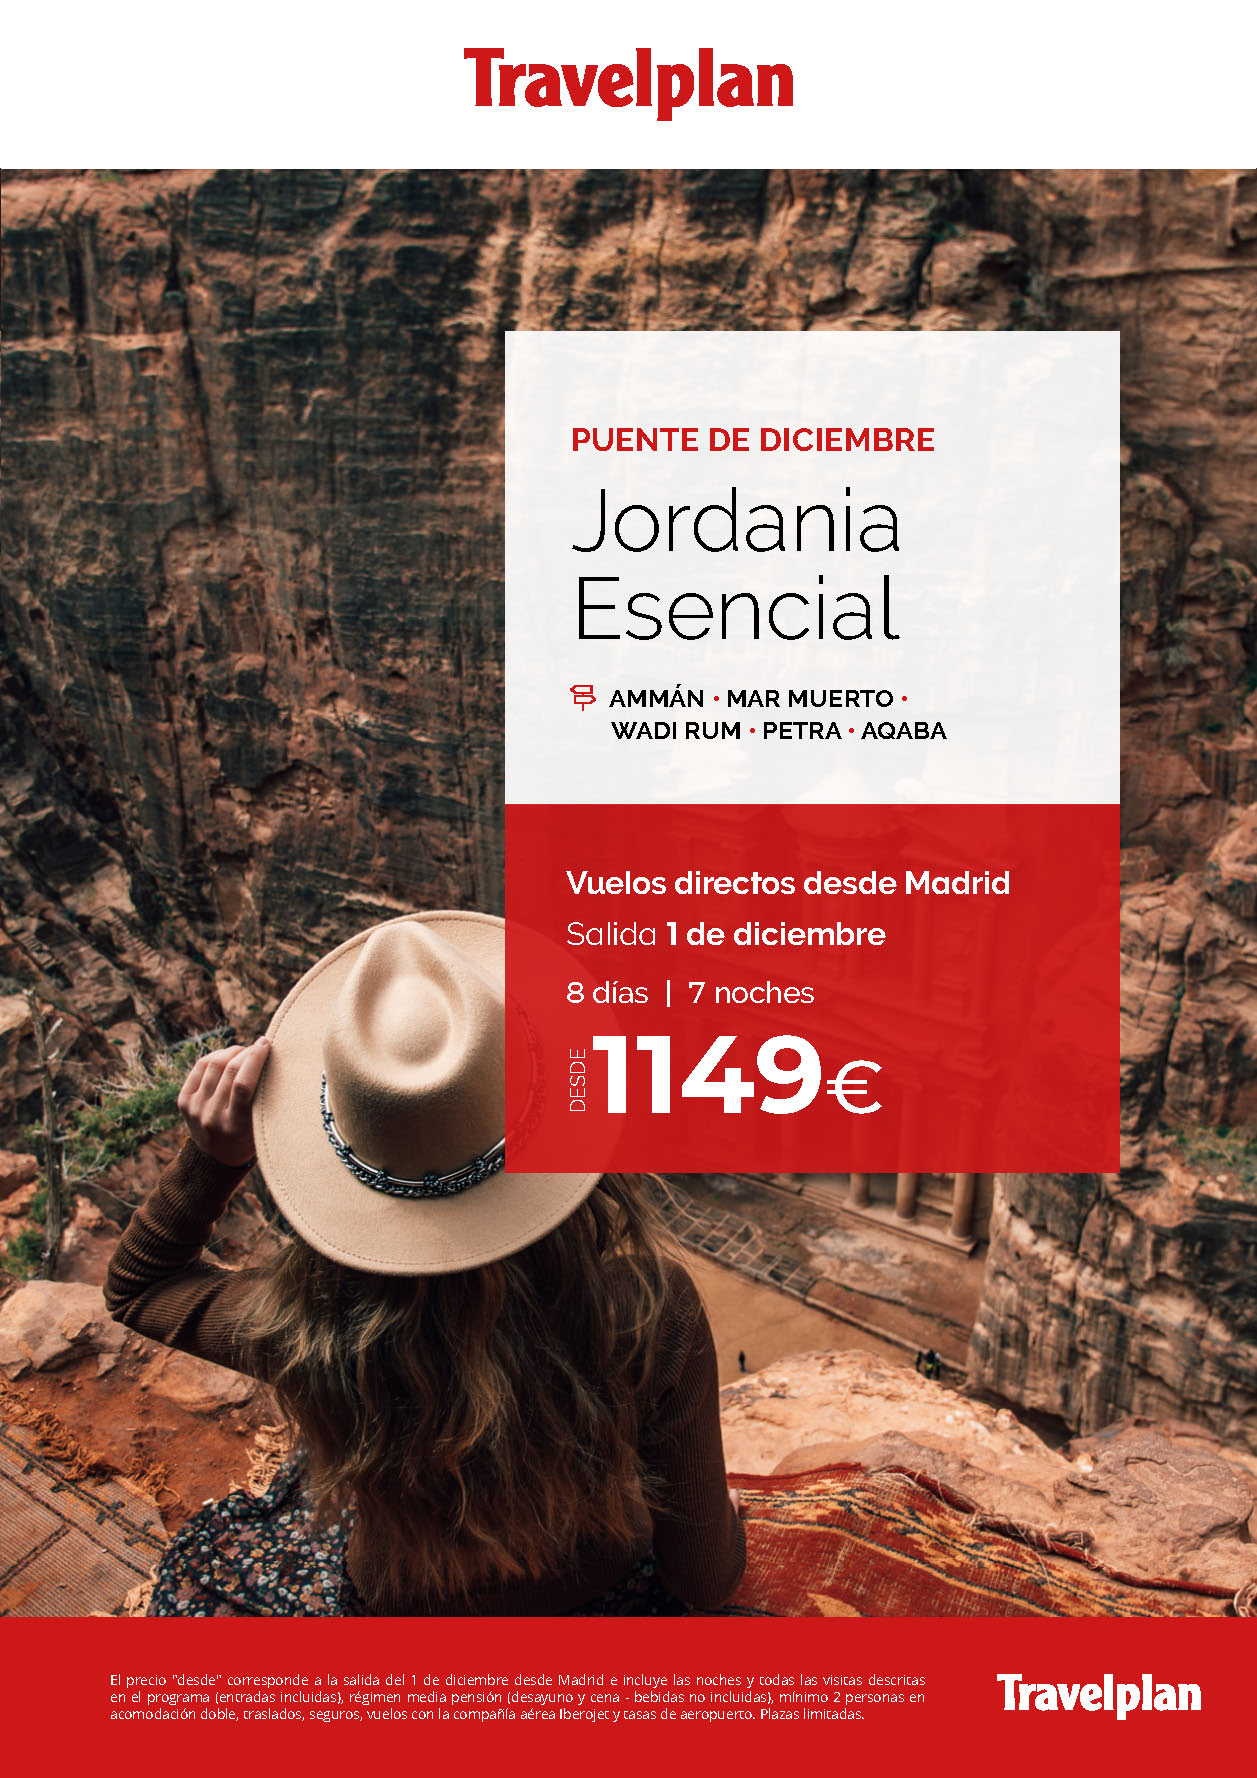 Oferta Travelplan Puente de Diciembre 2023 circuito Jordania Esencial 8 dias salida 1 Diciembre vuelo directo desde Madrid